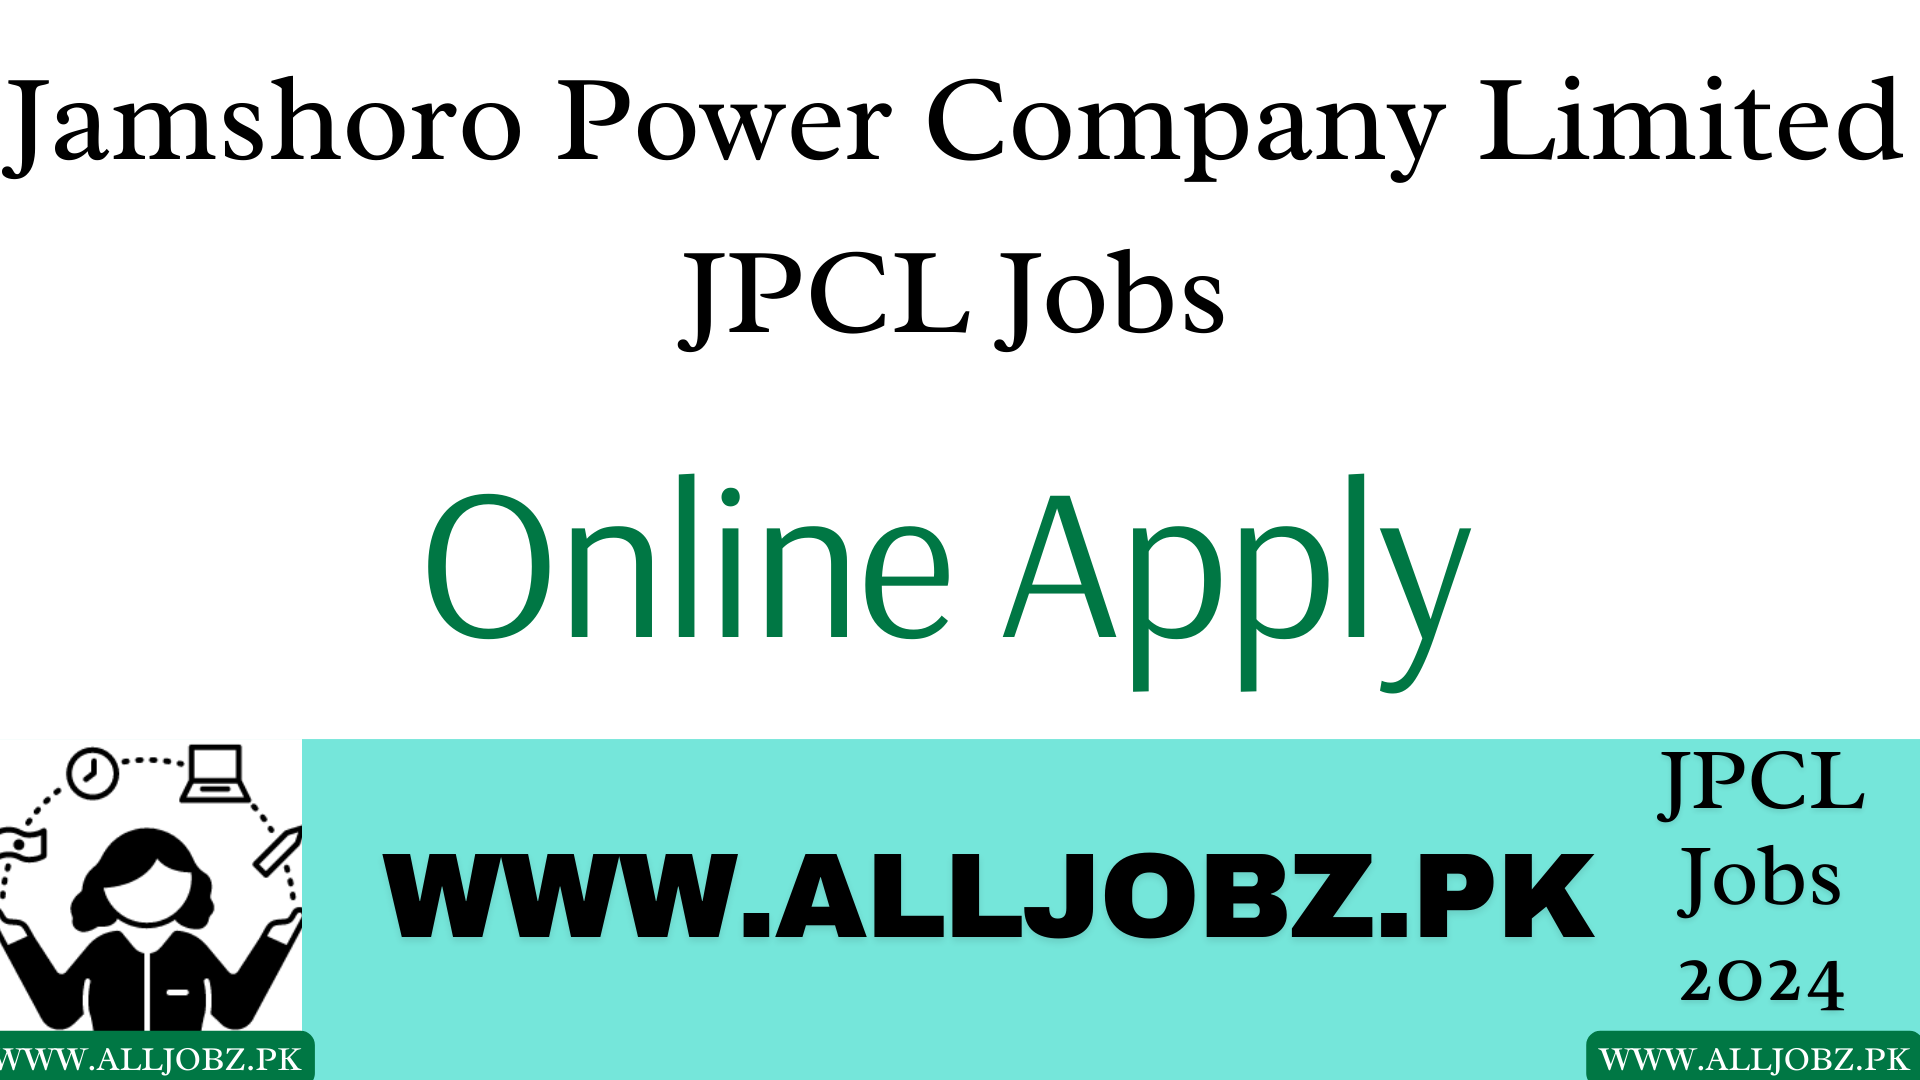 Jamshoro Power Company Limited Jpcl Jobs Online Apply, Jamshoro Power Company Limited Jpcl Jobs Salary,